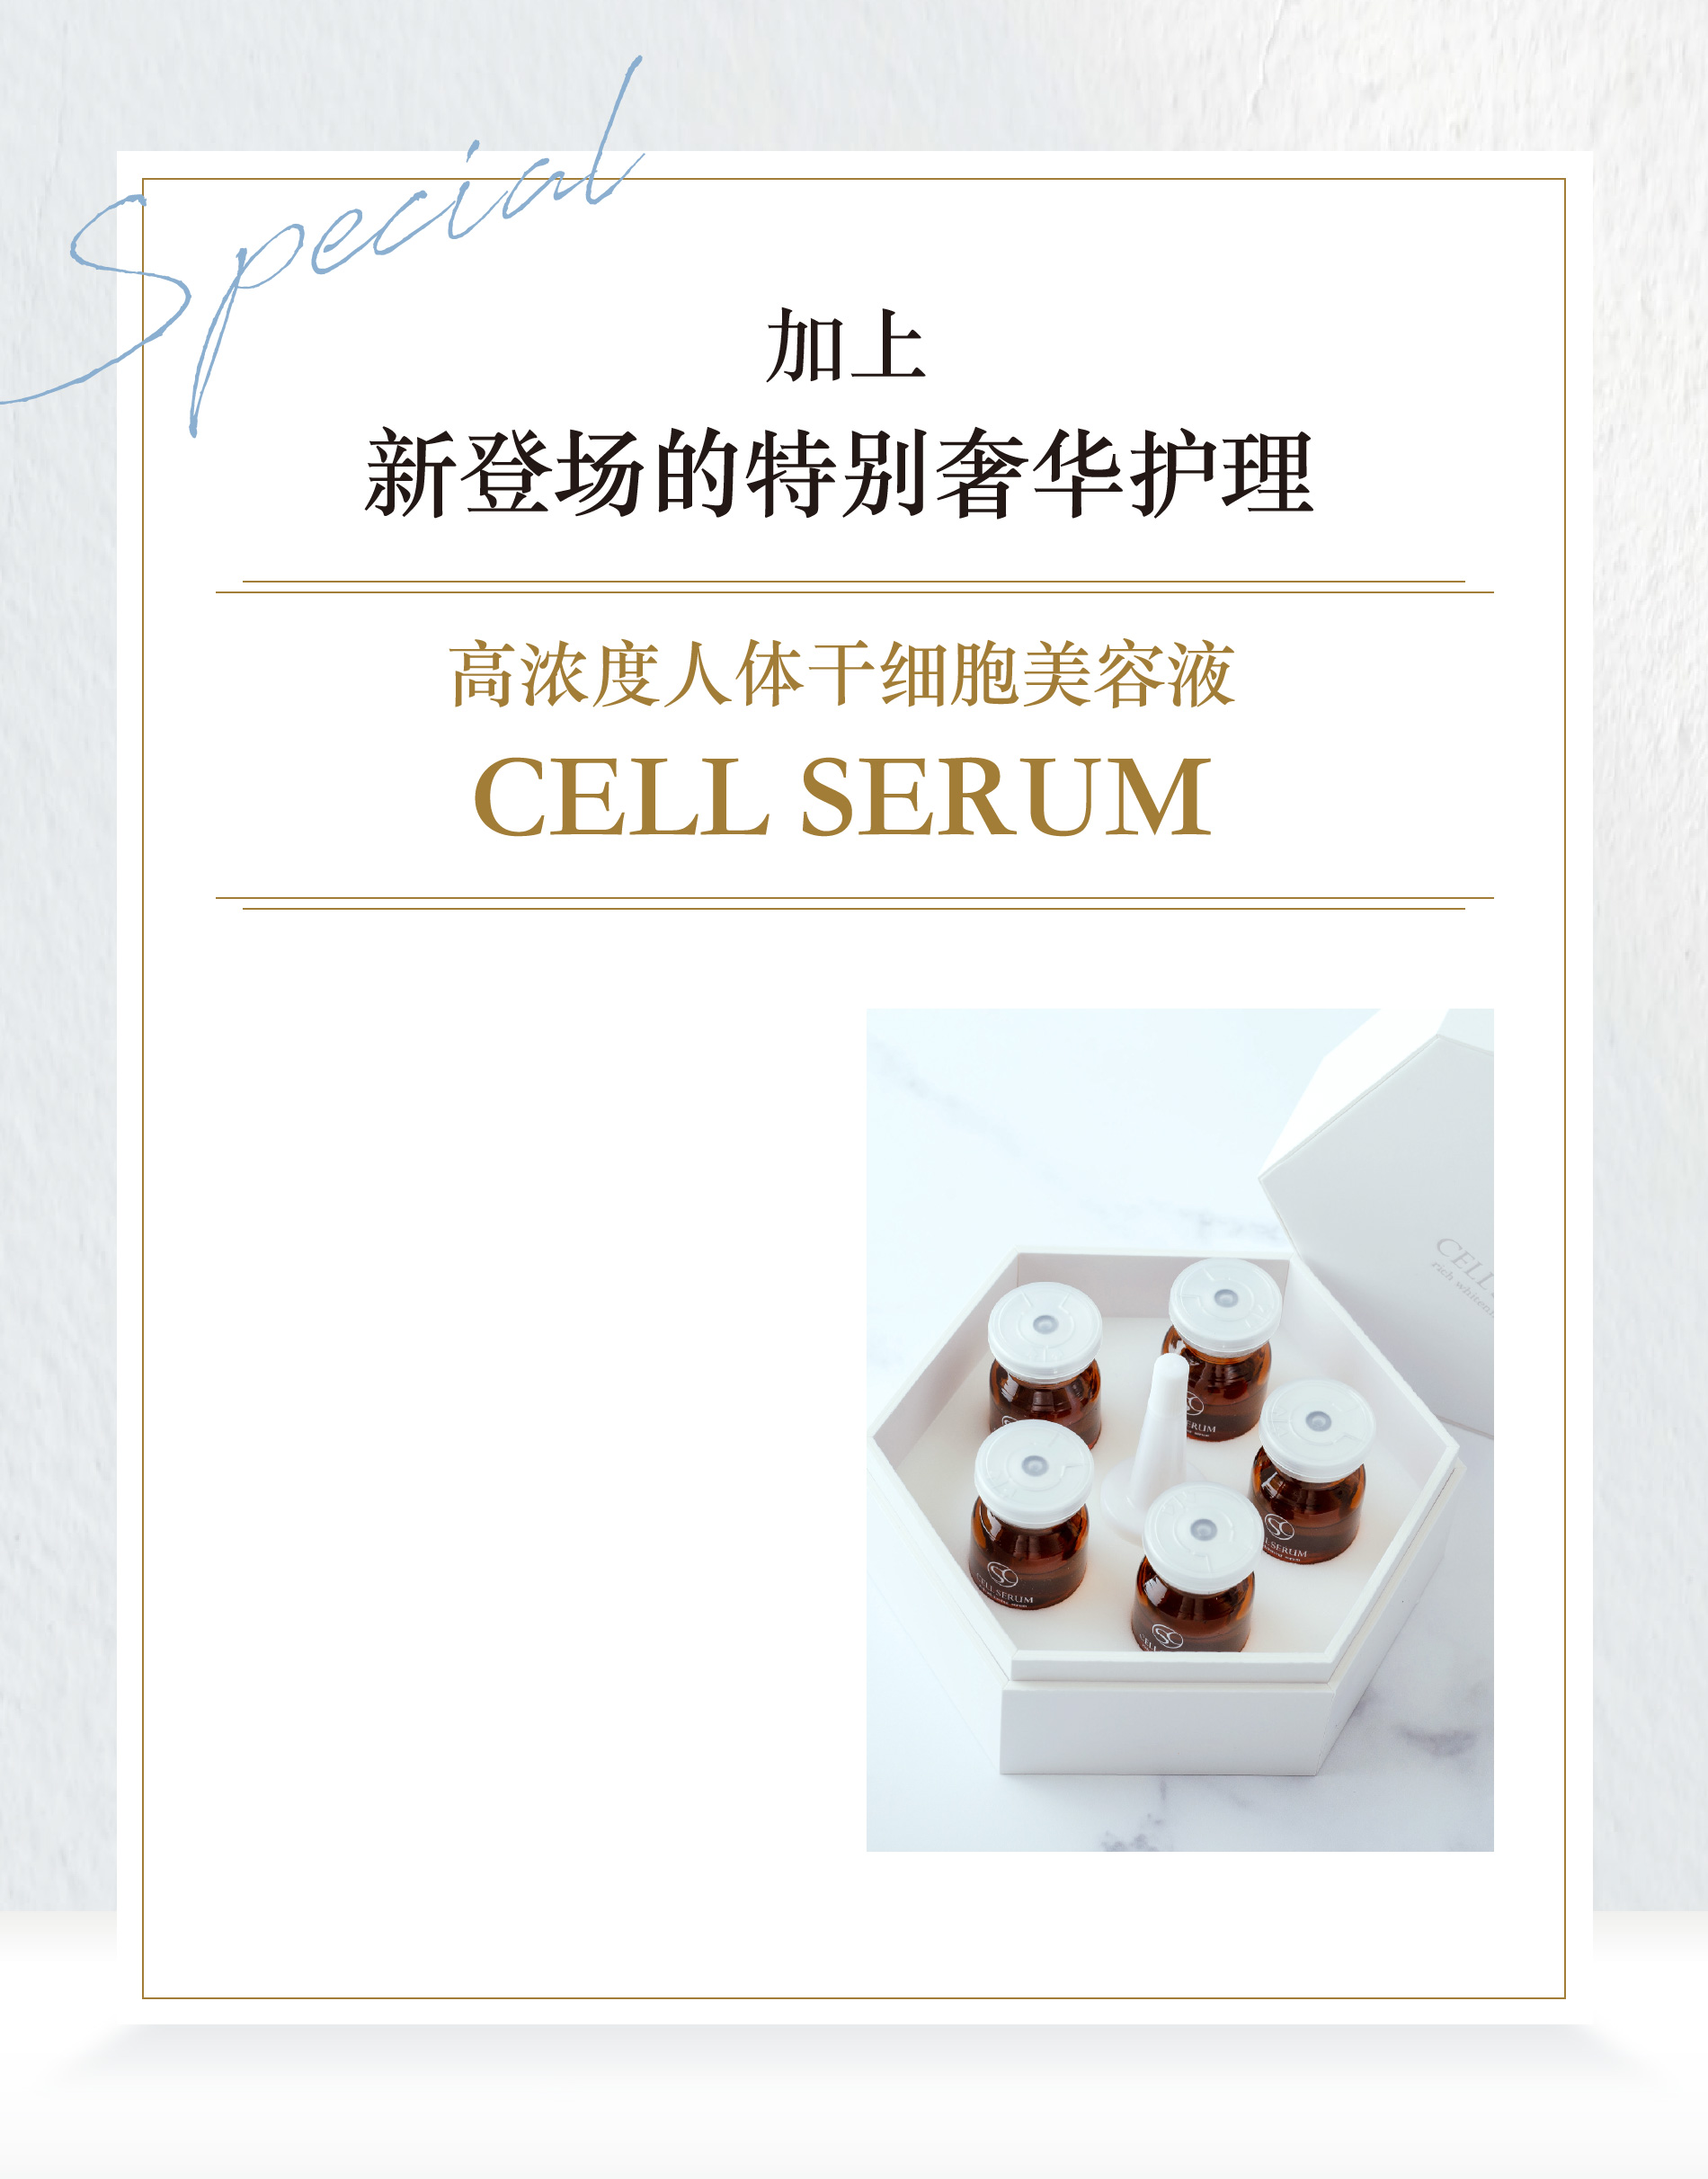 Special さらに スペシャルケアも新登場！高濃度ヒト幹細胞美容液 CELL SERUM